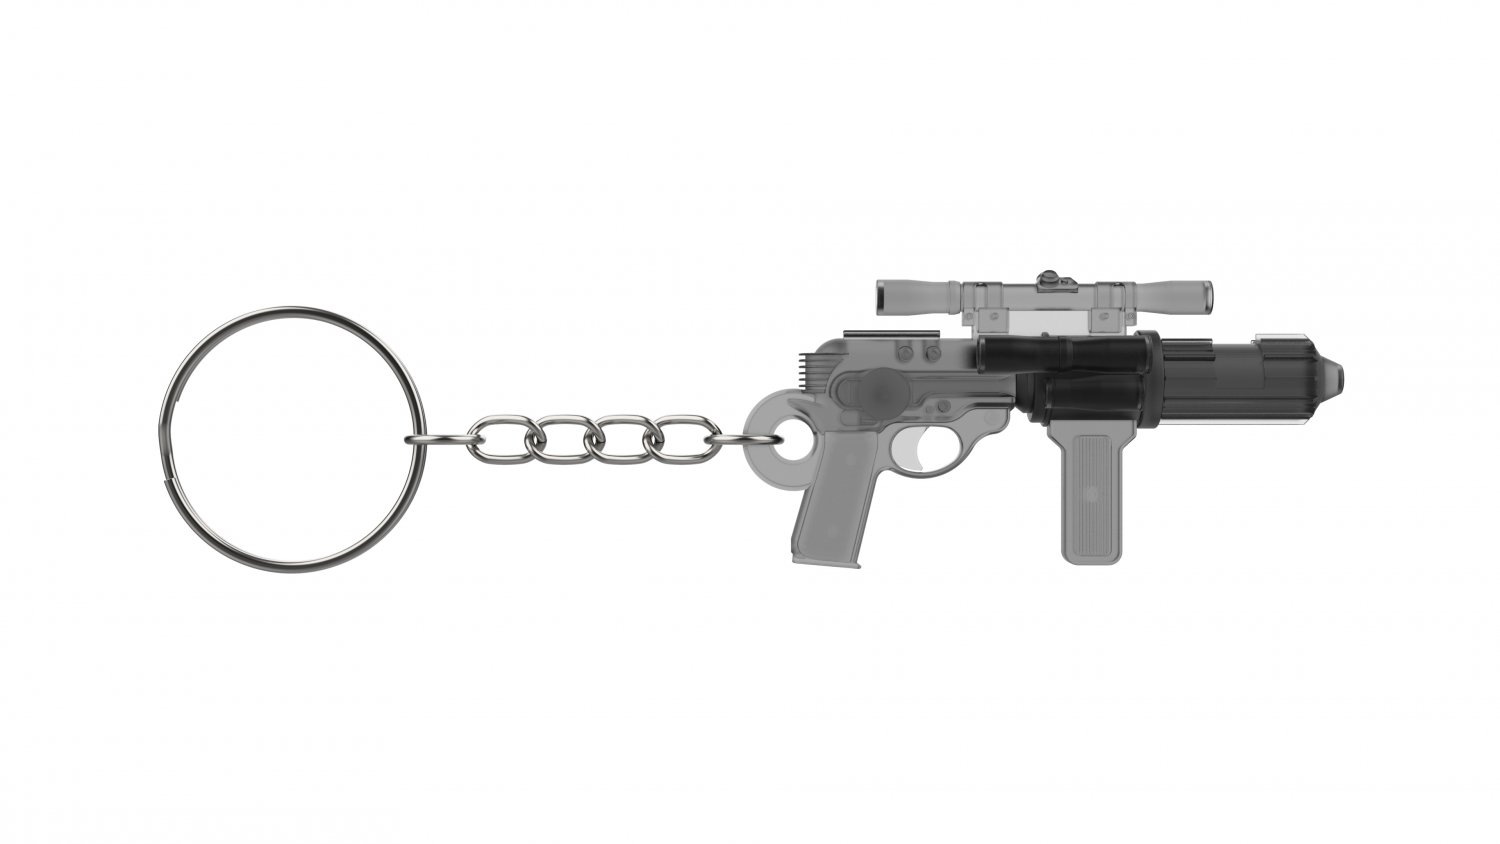 STL file Star Wars Key Chain ⭐・3D printable design to download